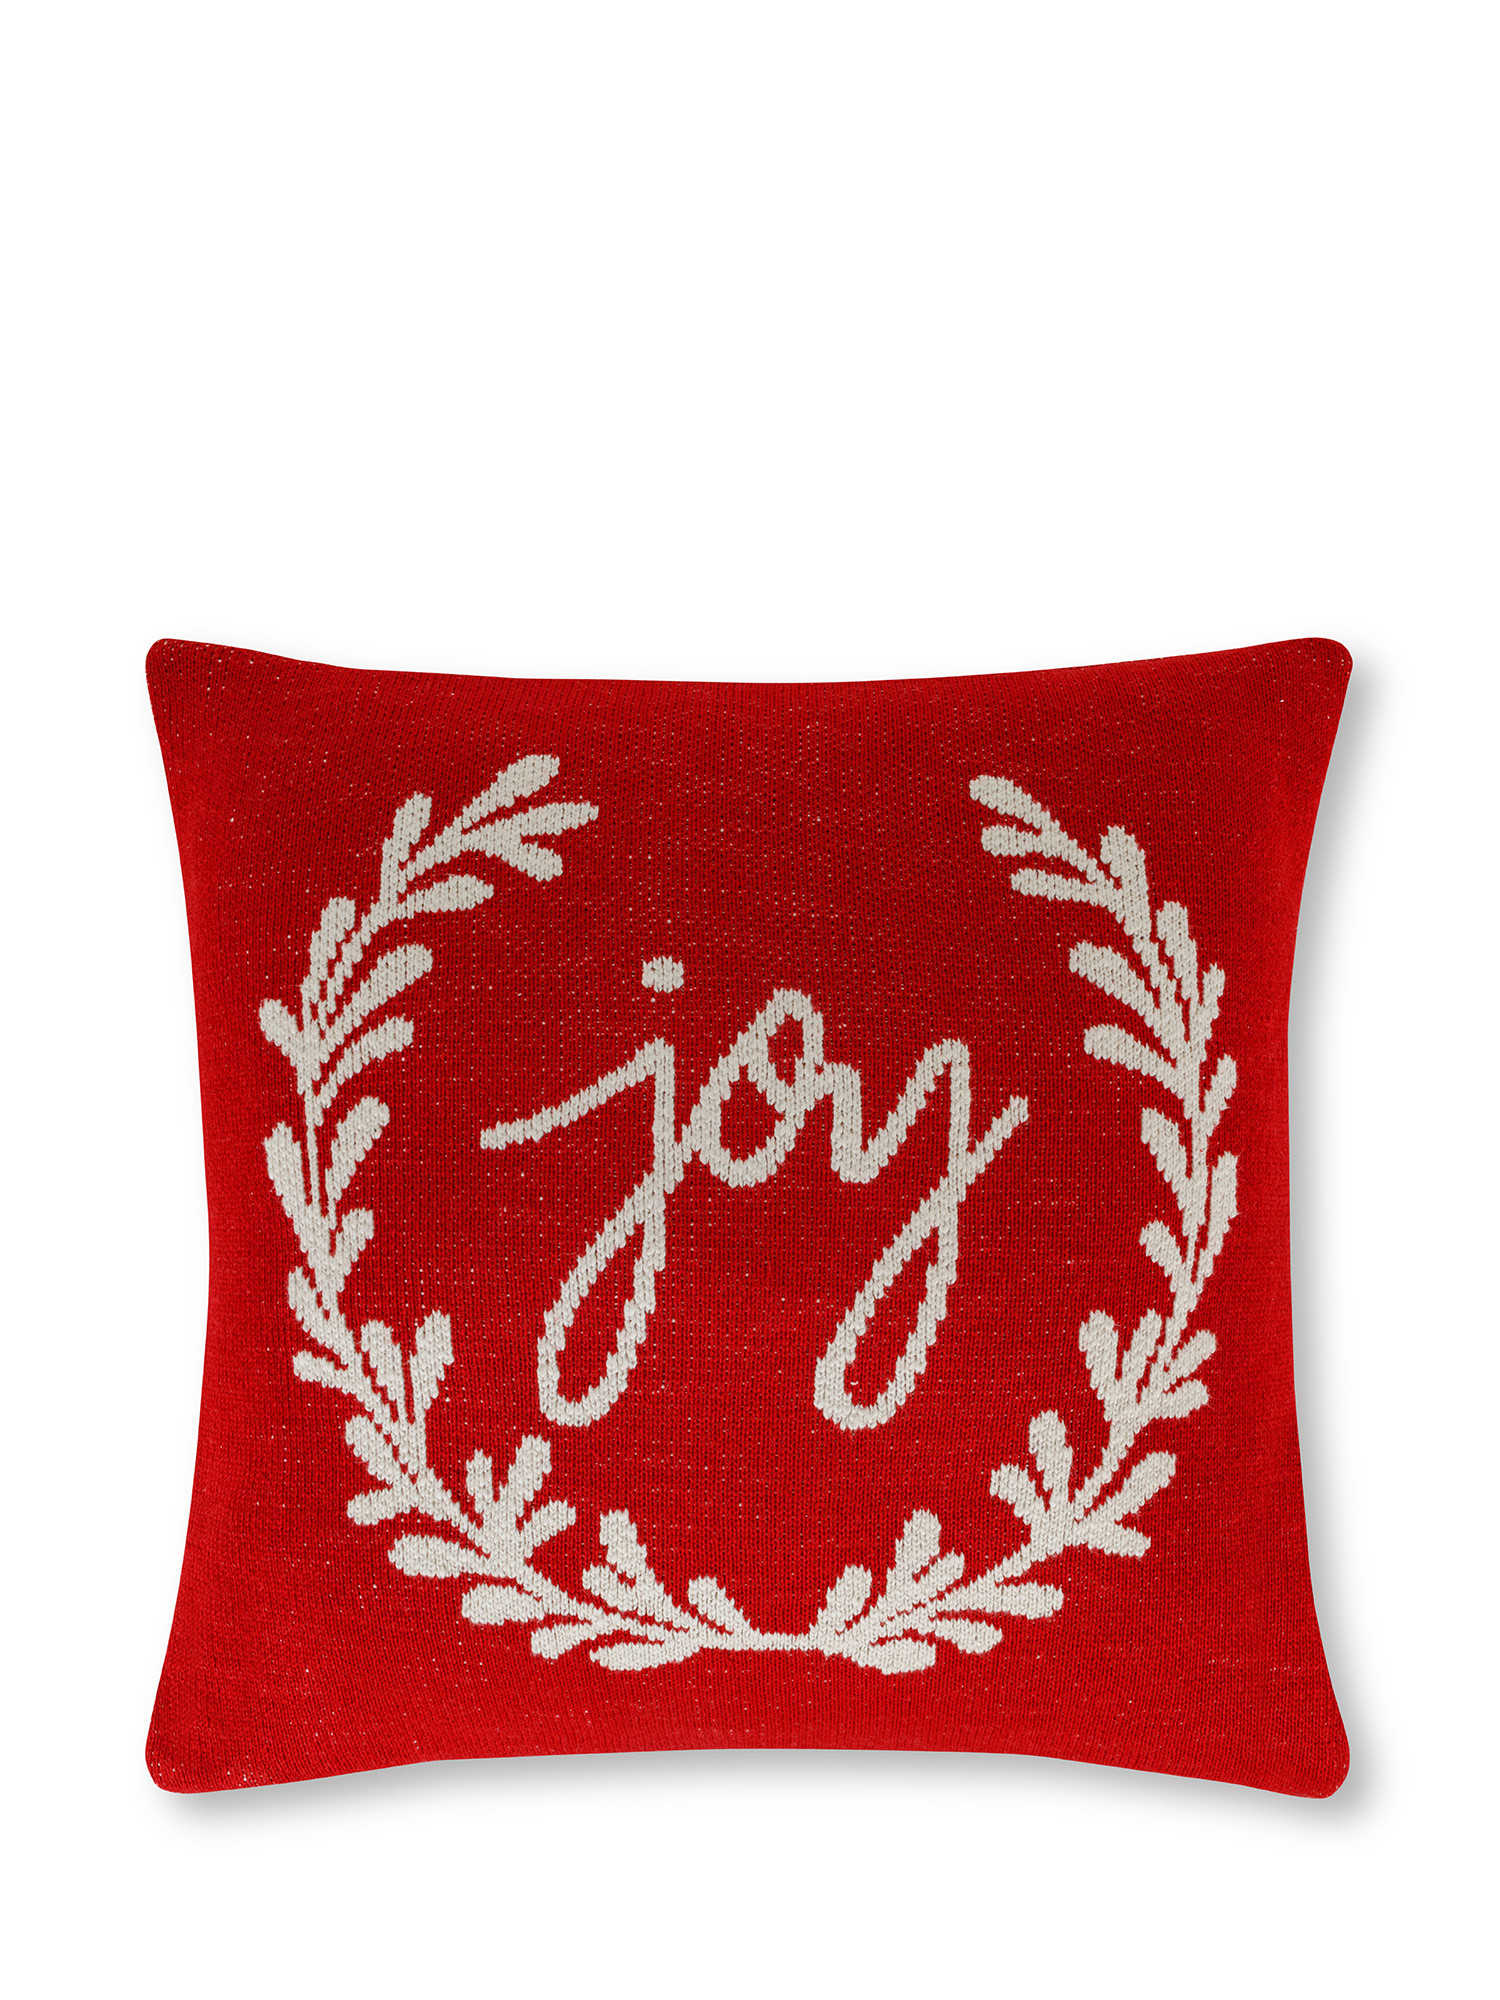 Cuscino in maglia jacquard con ghirlanda joy 45x45 cm, Rosso, large image number 0